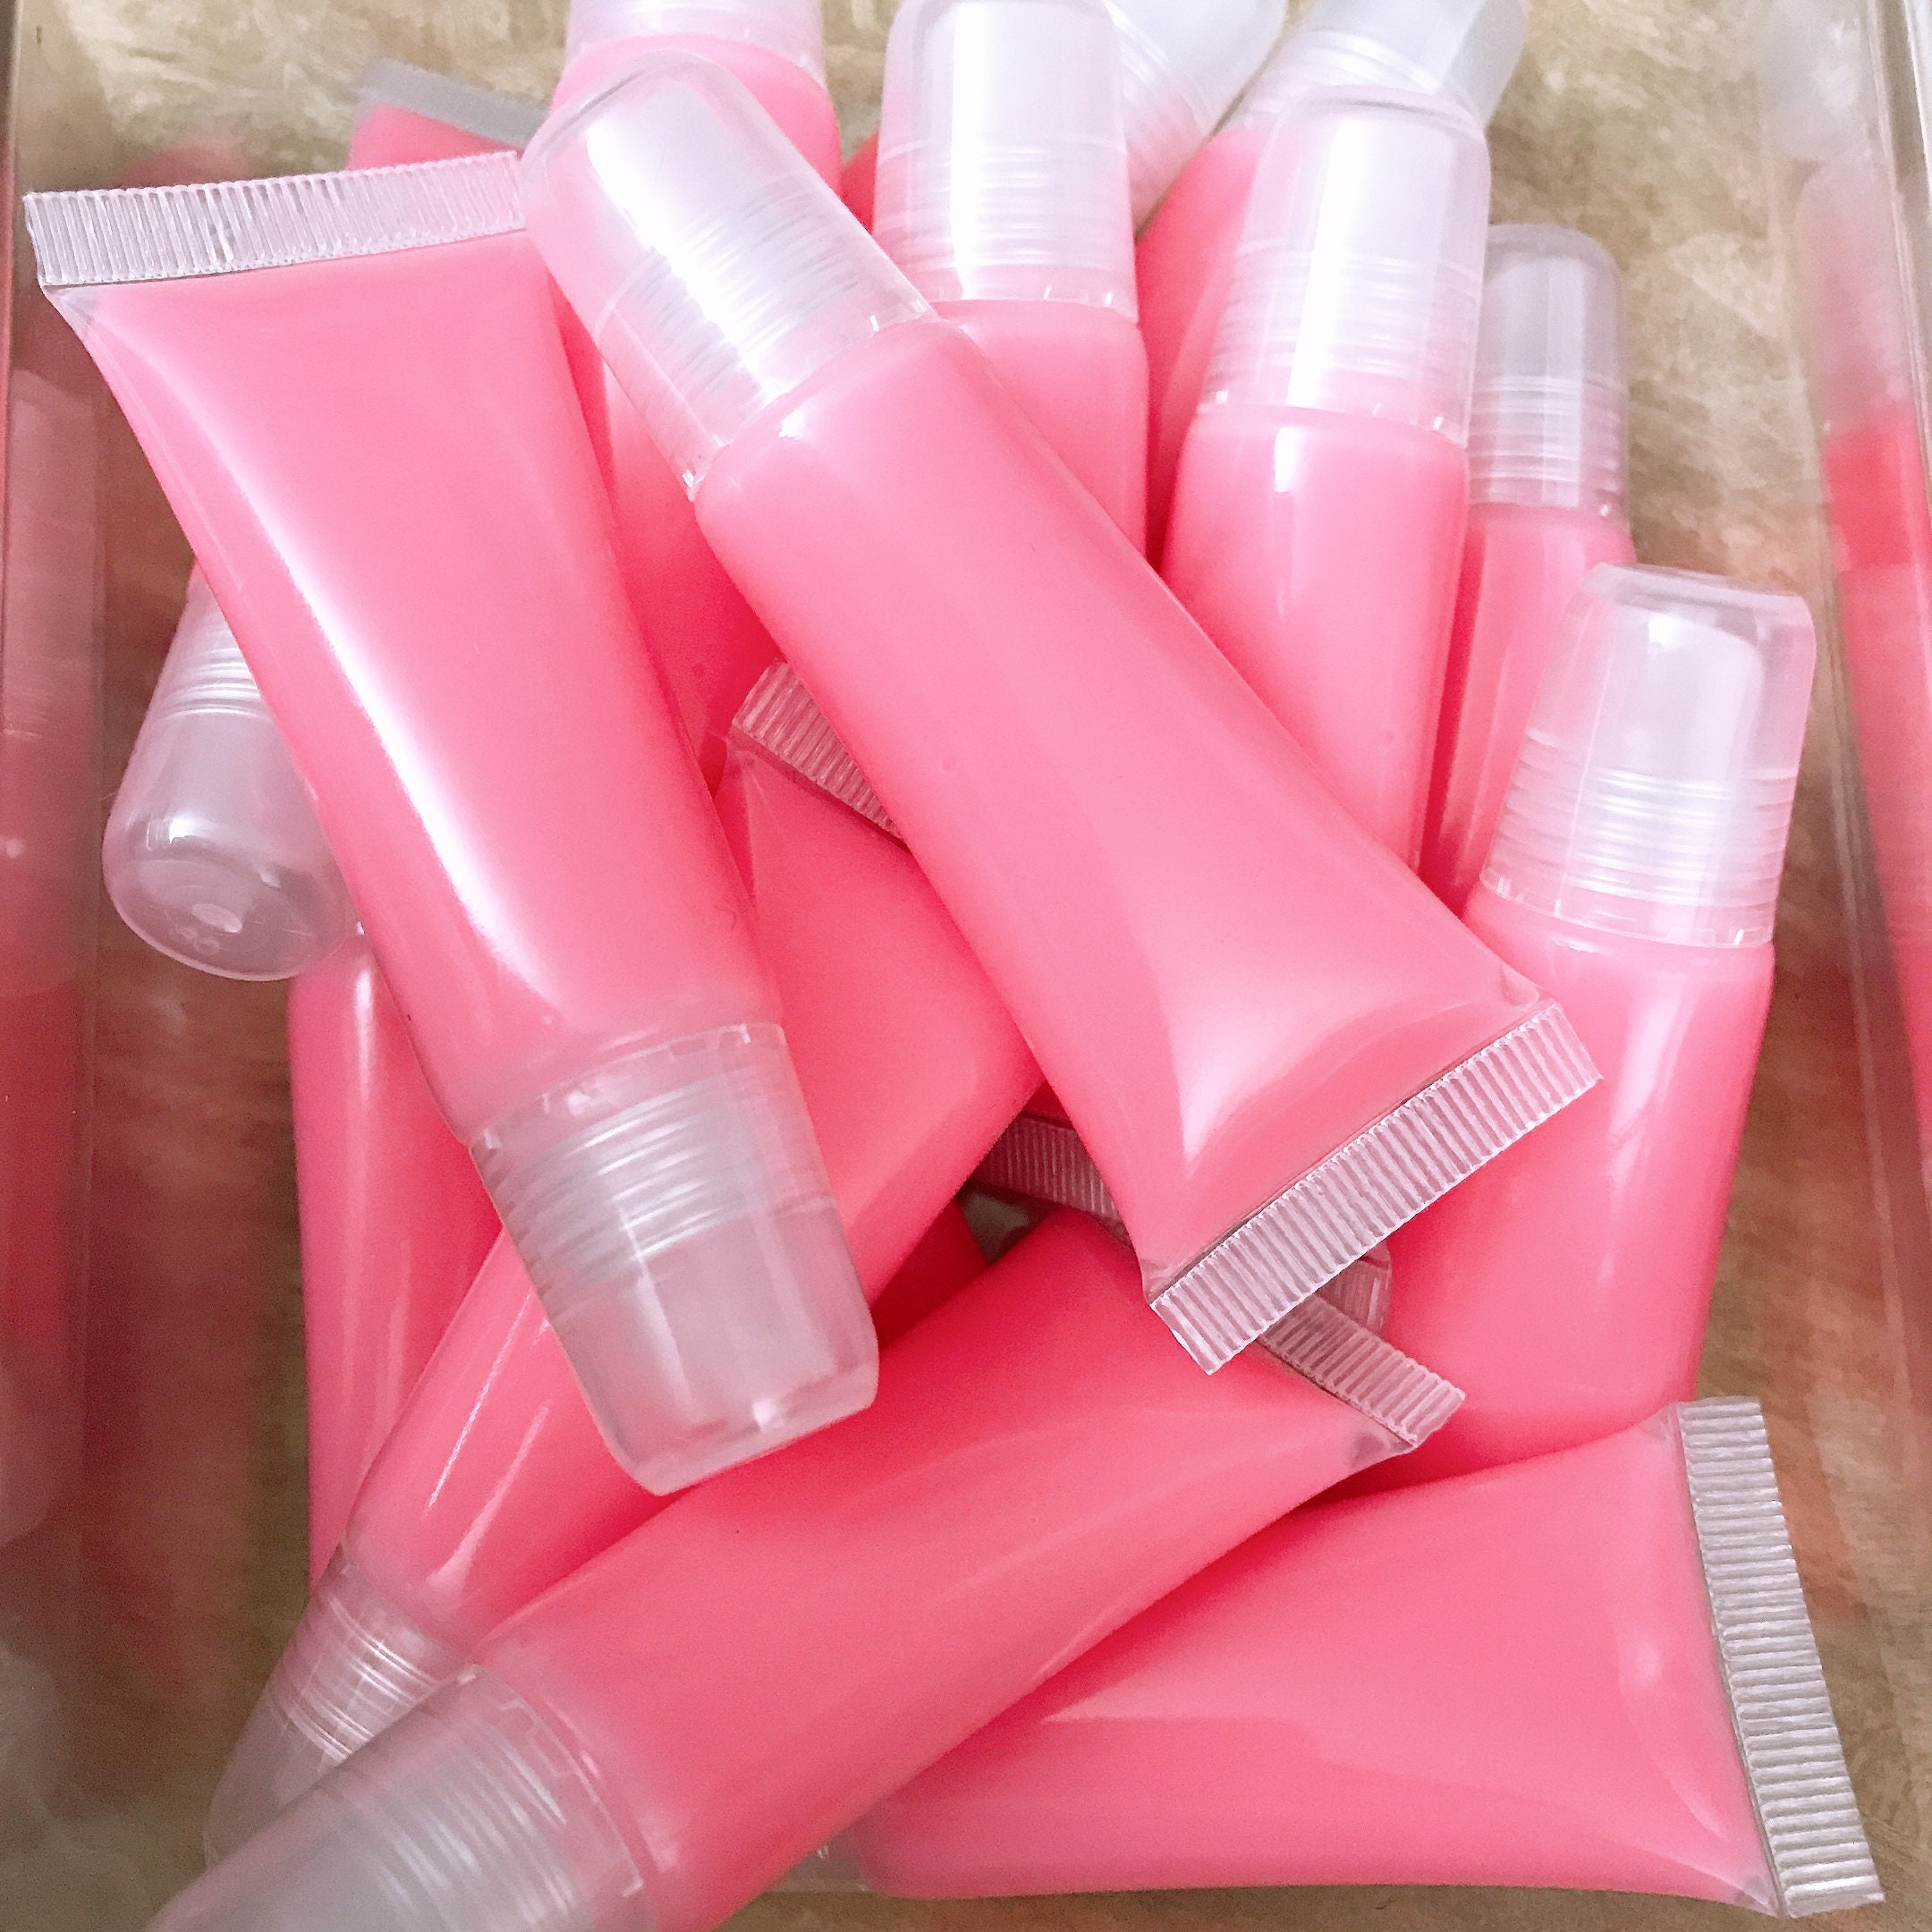 Wholesale Bulk Custom Squeeze Tube Lipgloss Glossy Plumping Shimmer Pigment  Lip Gloss - China Lip Gloss and Lipgloss price